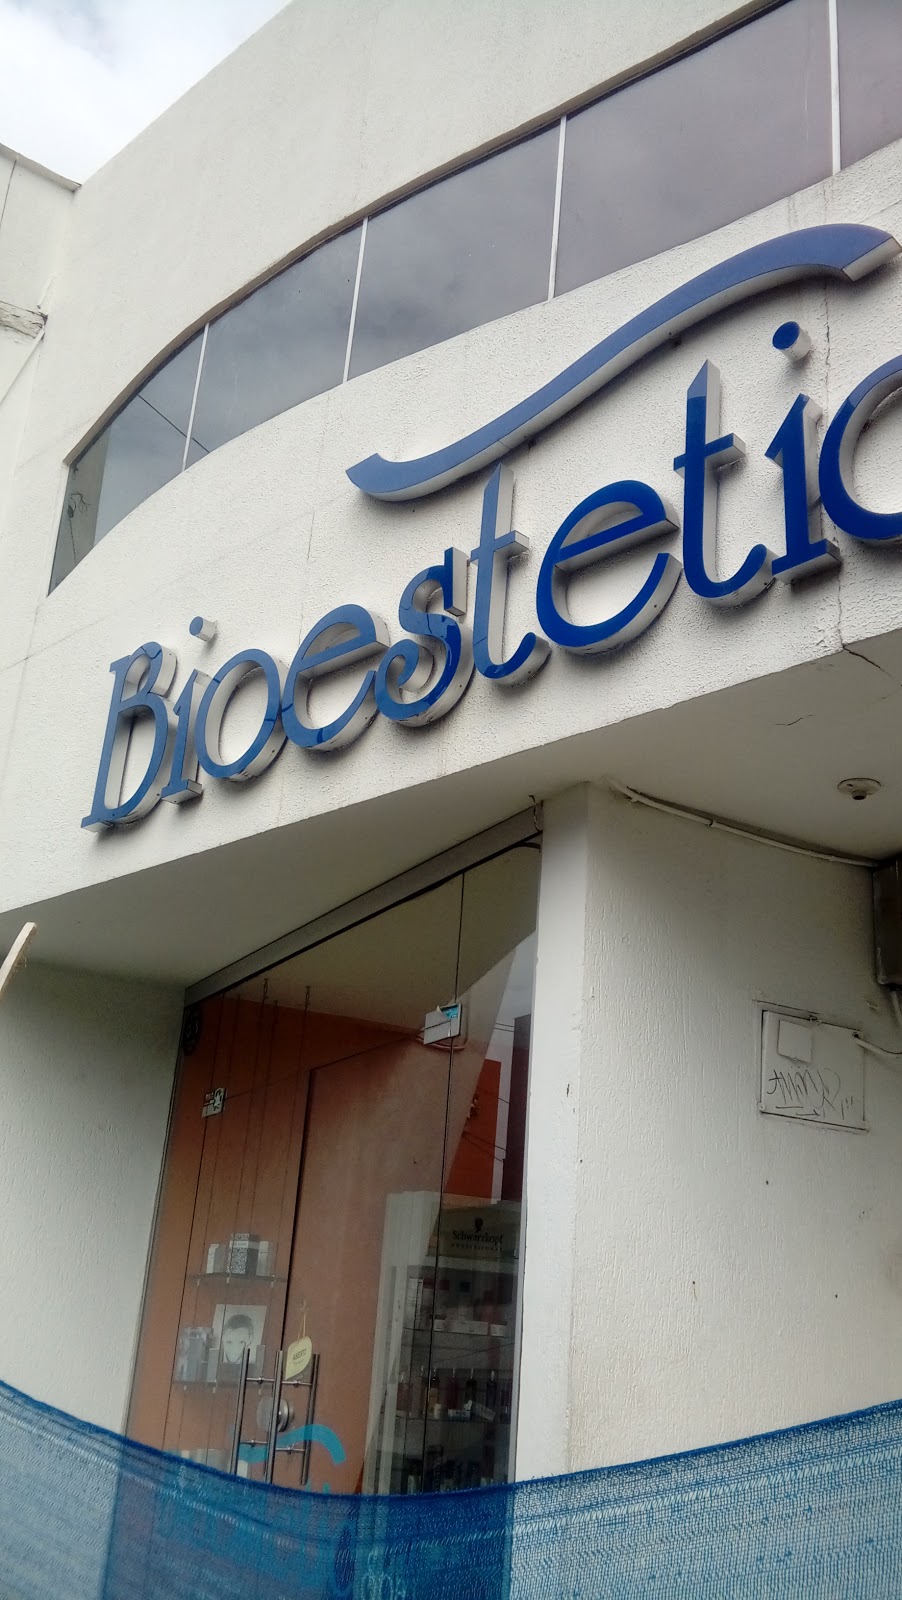 Bioestetic Spa